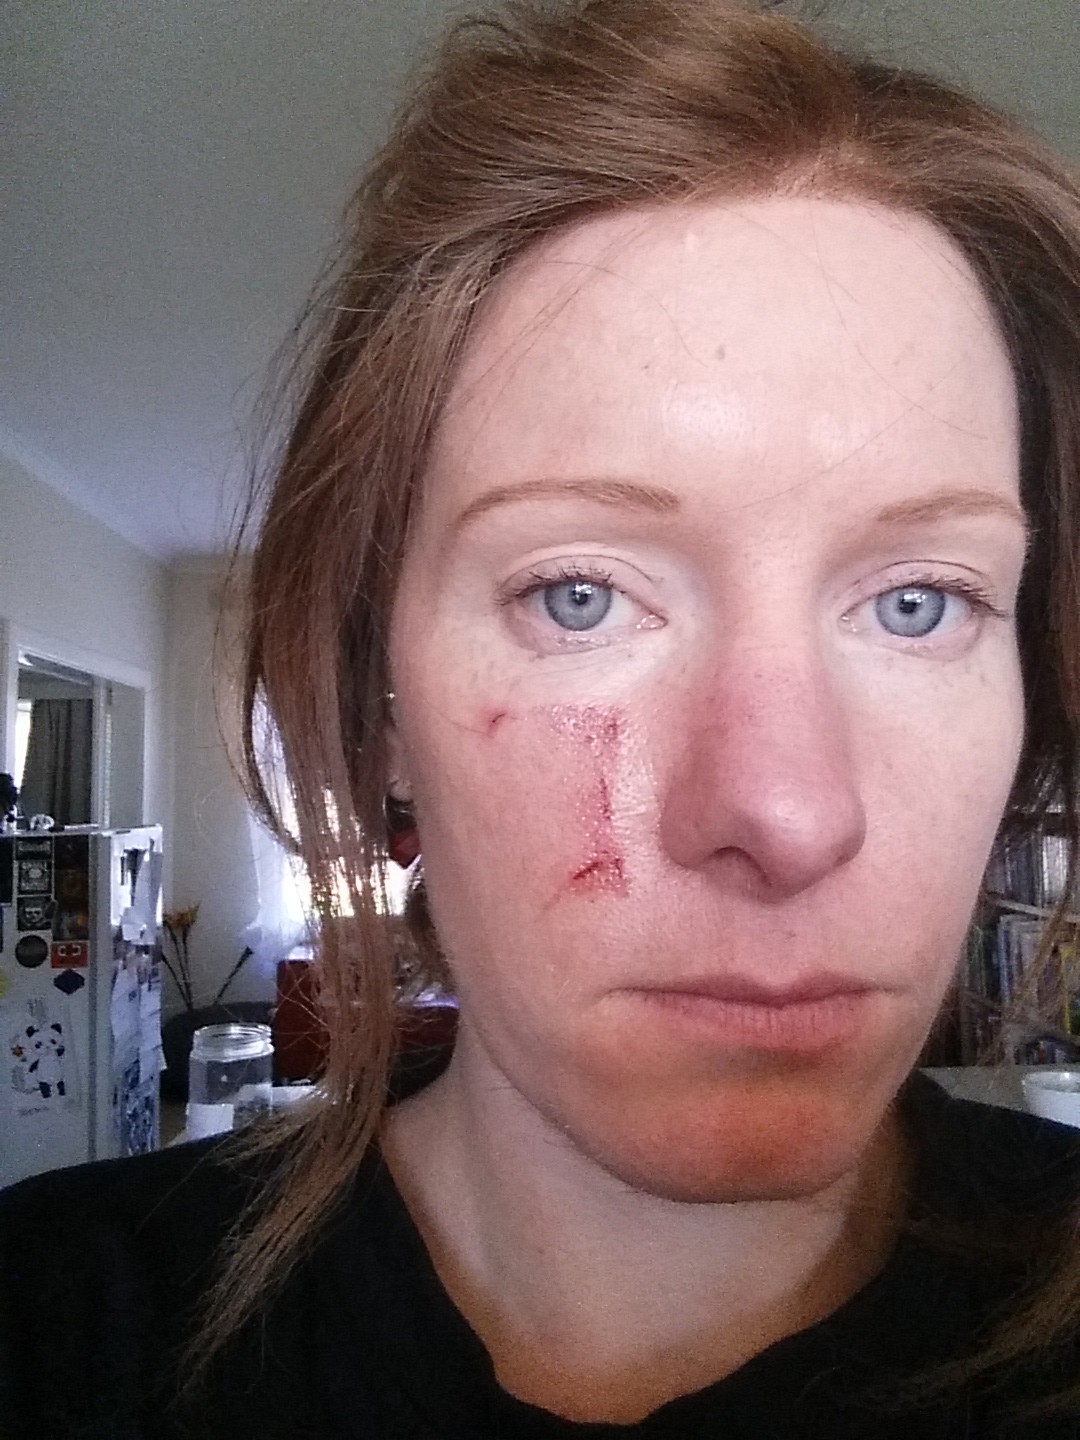 woman versus steel pole - photo of the injury